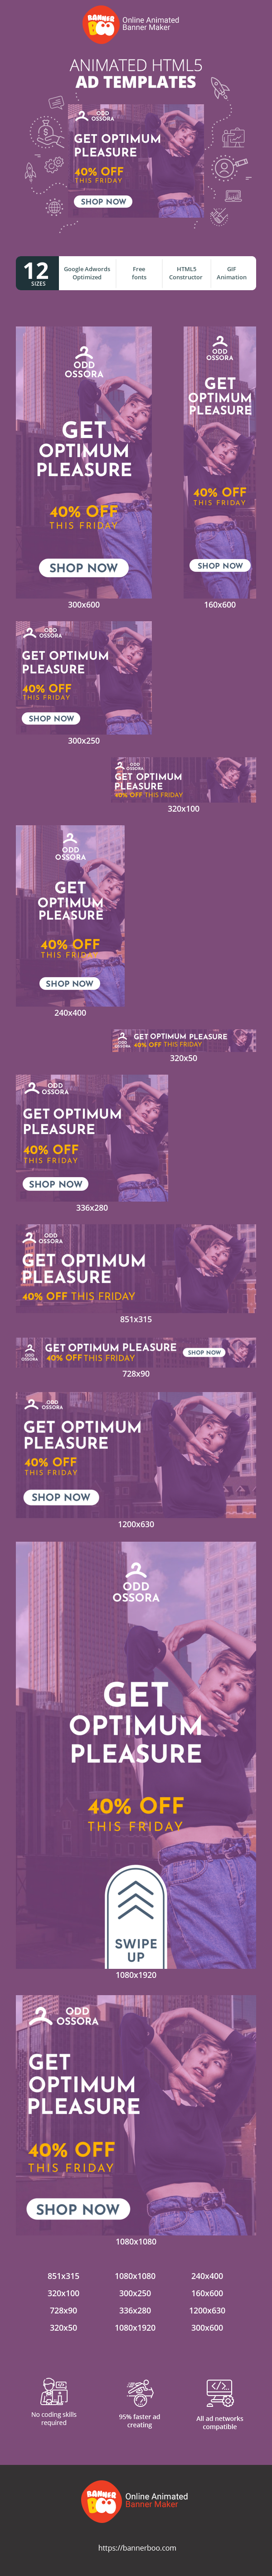 Szablon reklamy banerowej — Get Optimum Pleasure — 40% Off This Friday